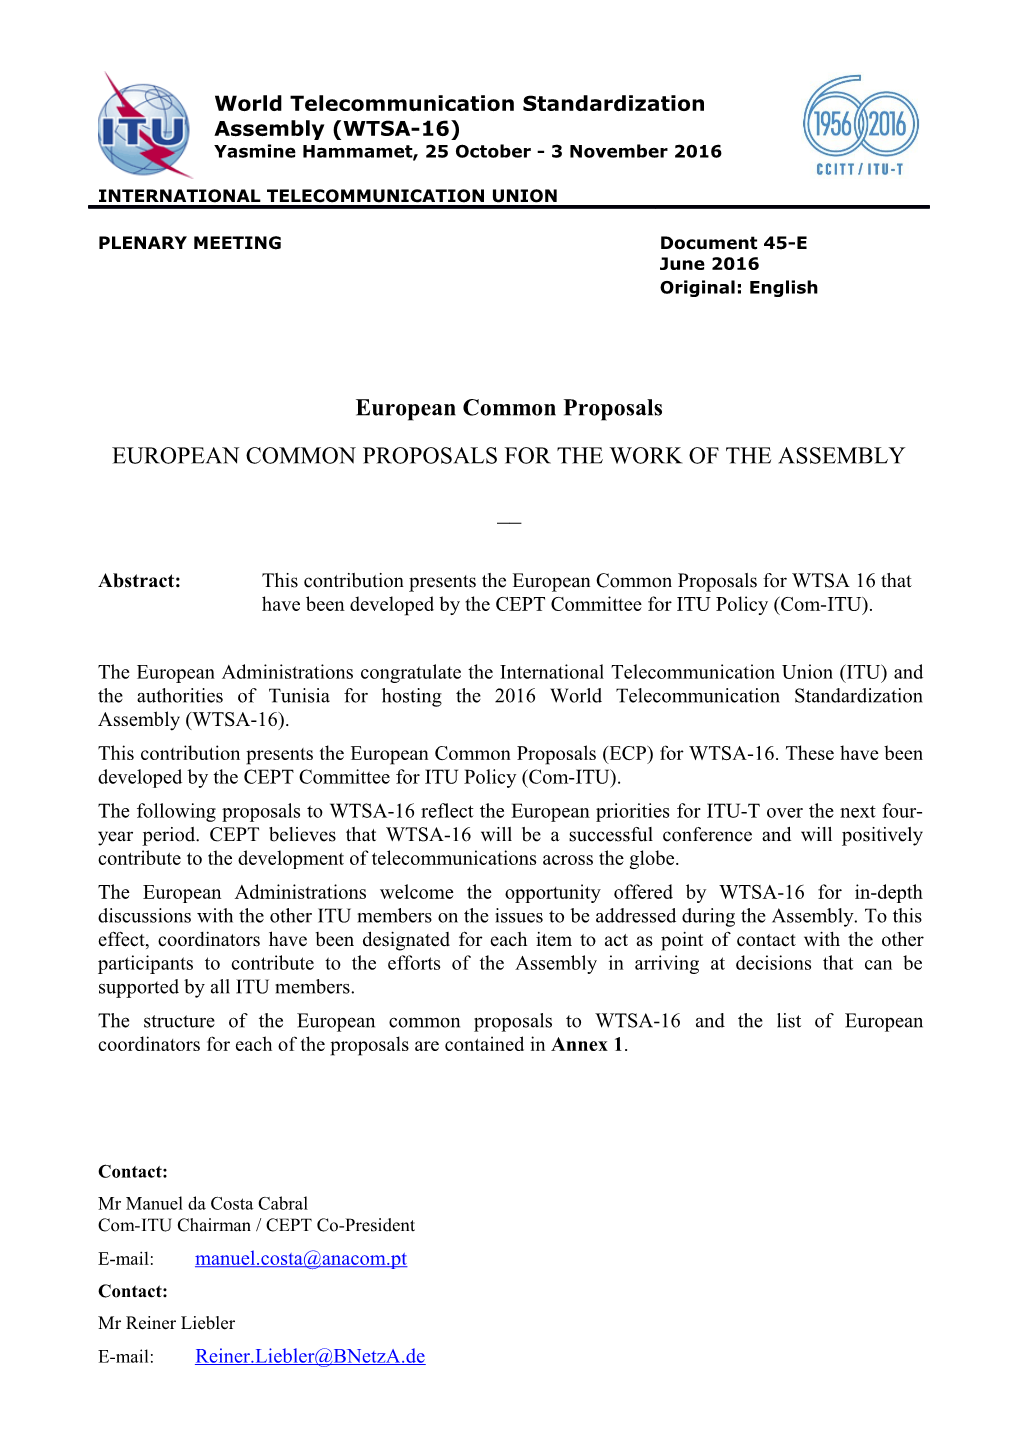 The European Administrations Congratulate the International Telecommunication Union (ITU)